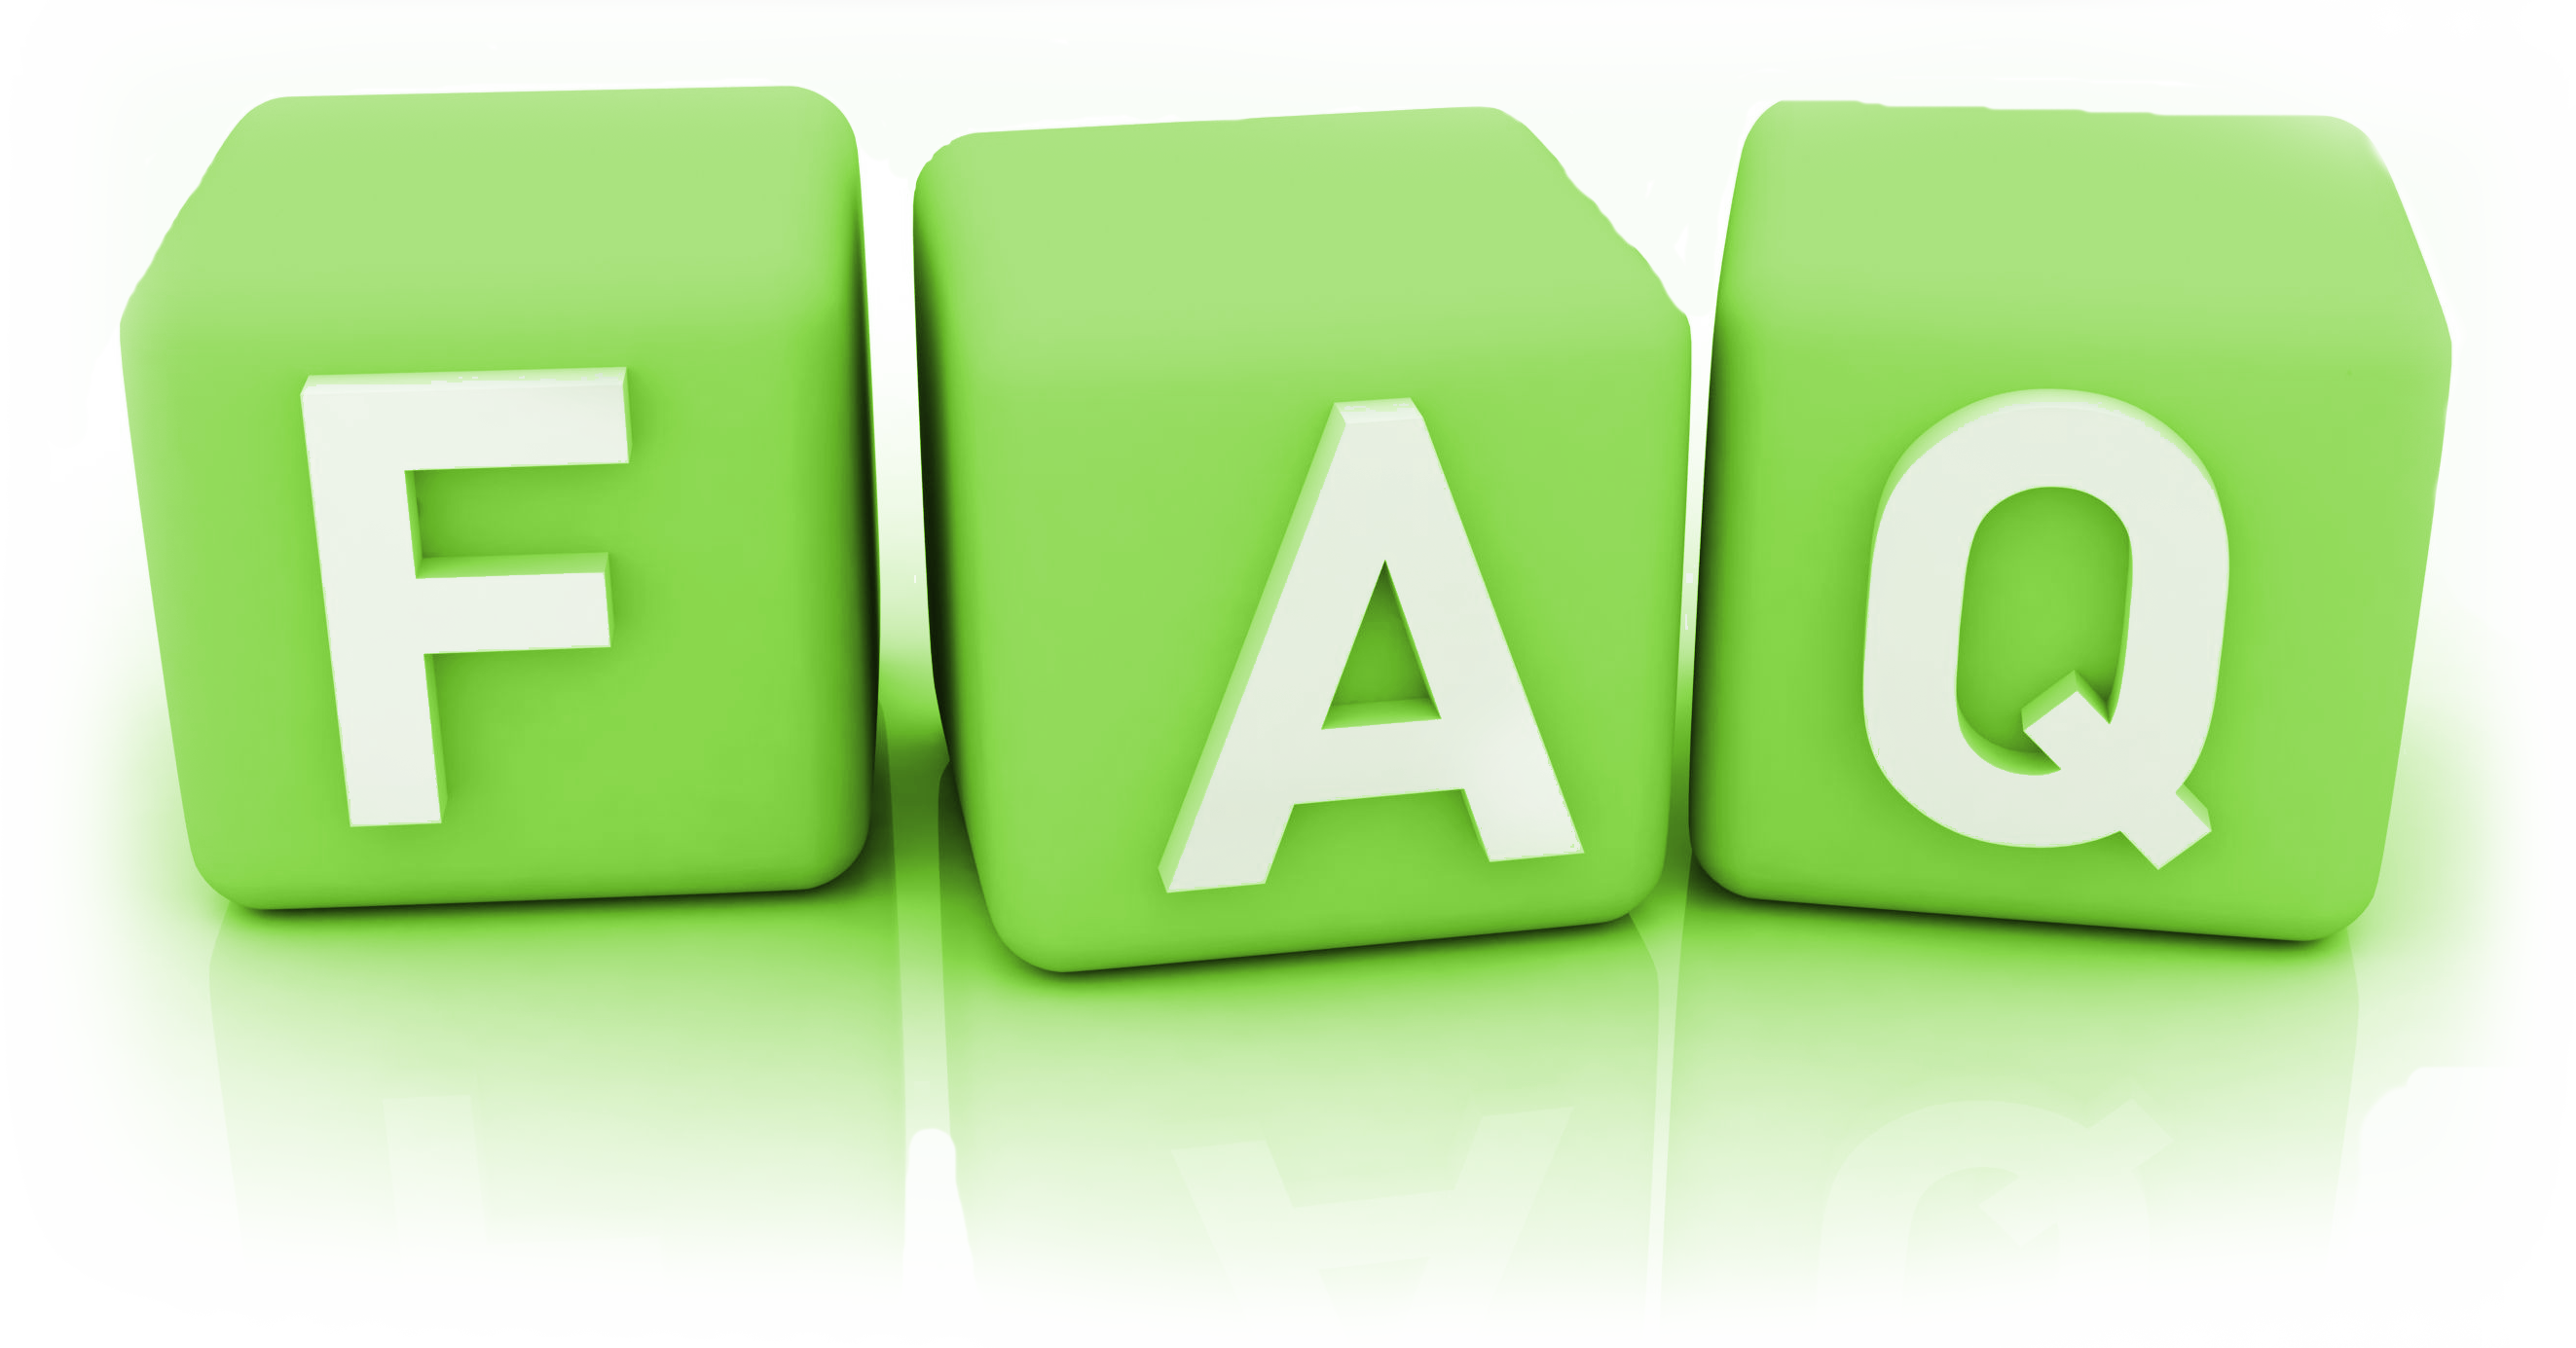 F a q 3. FAQ картинка. FAQ без фона. FAQ на прозрачном фоне. Арбитраж трейдинг.